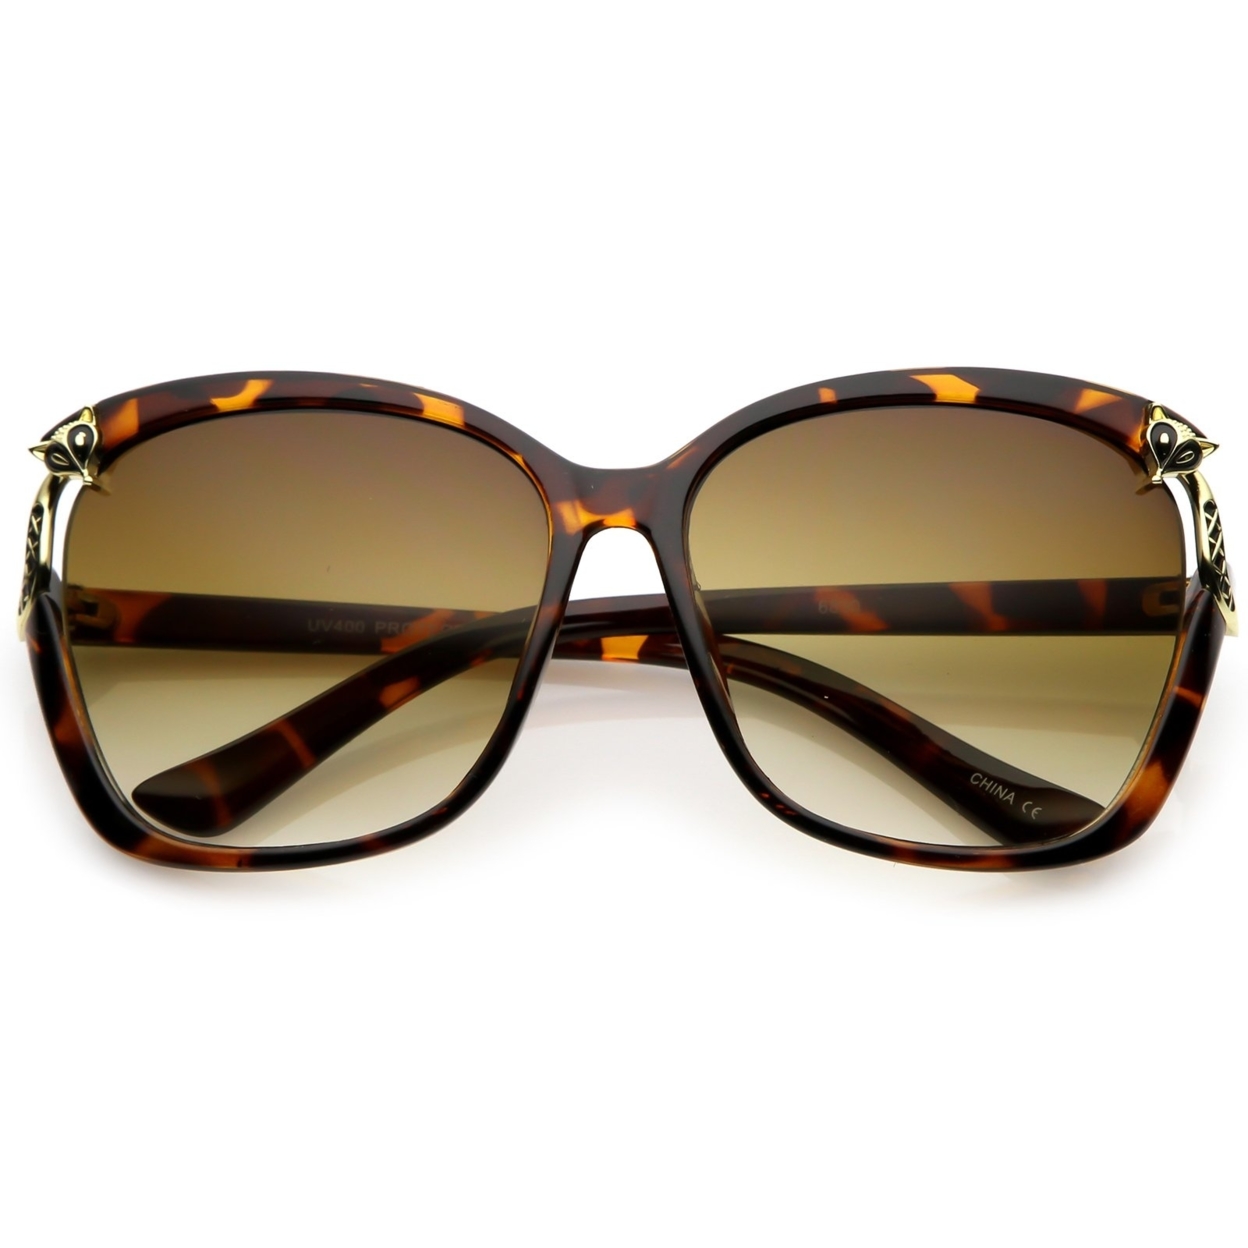 Women's Oversize Square Sunglasses With Metal Fox Accent Cutout 60mm - Black Silver / Lavender